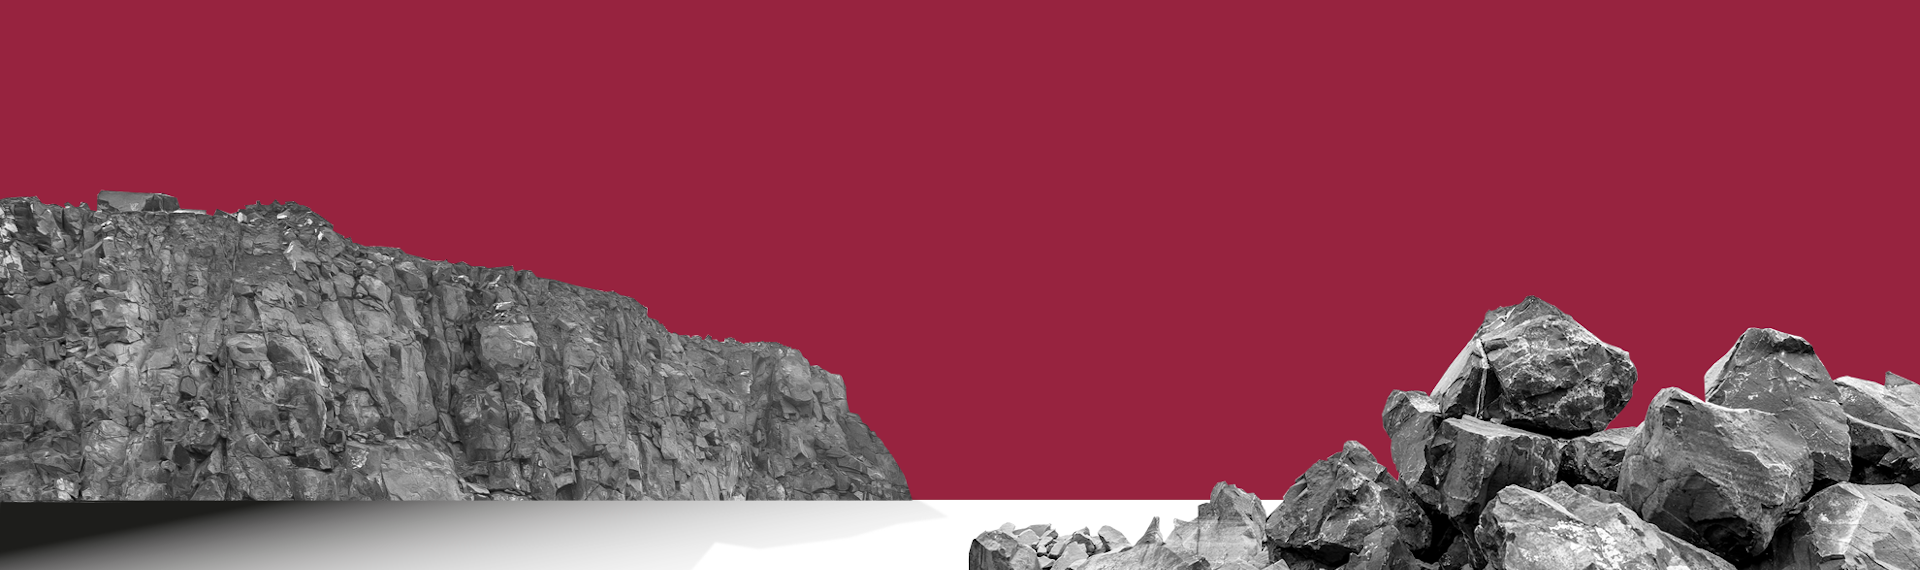 klippor mot röd bakgrund